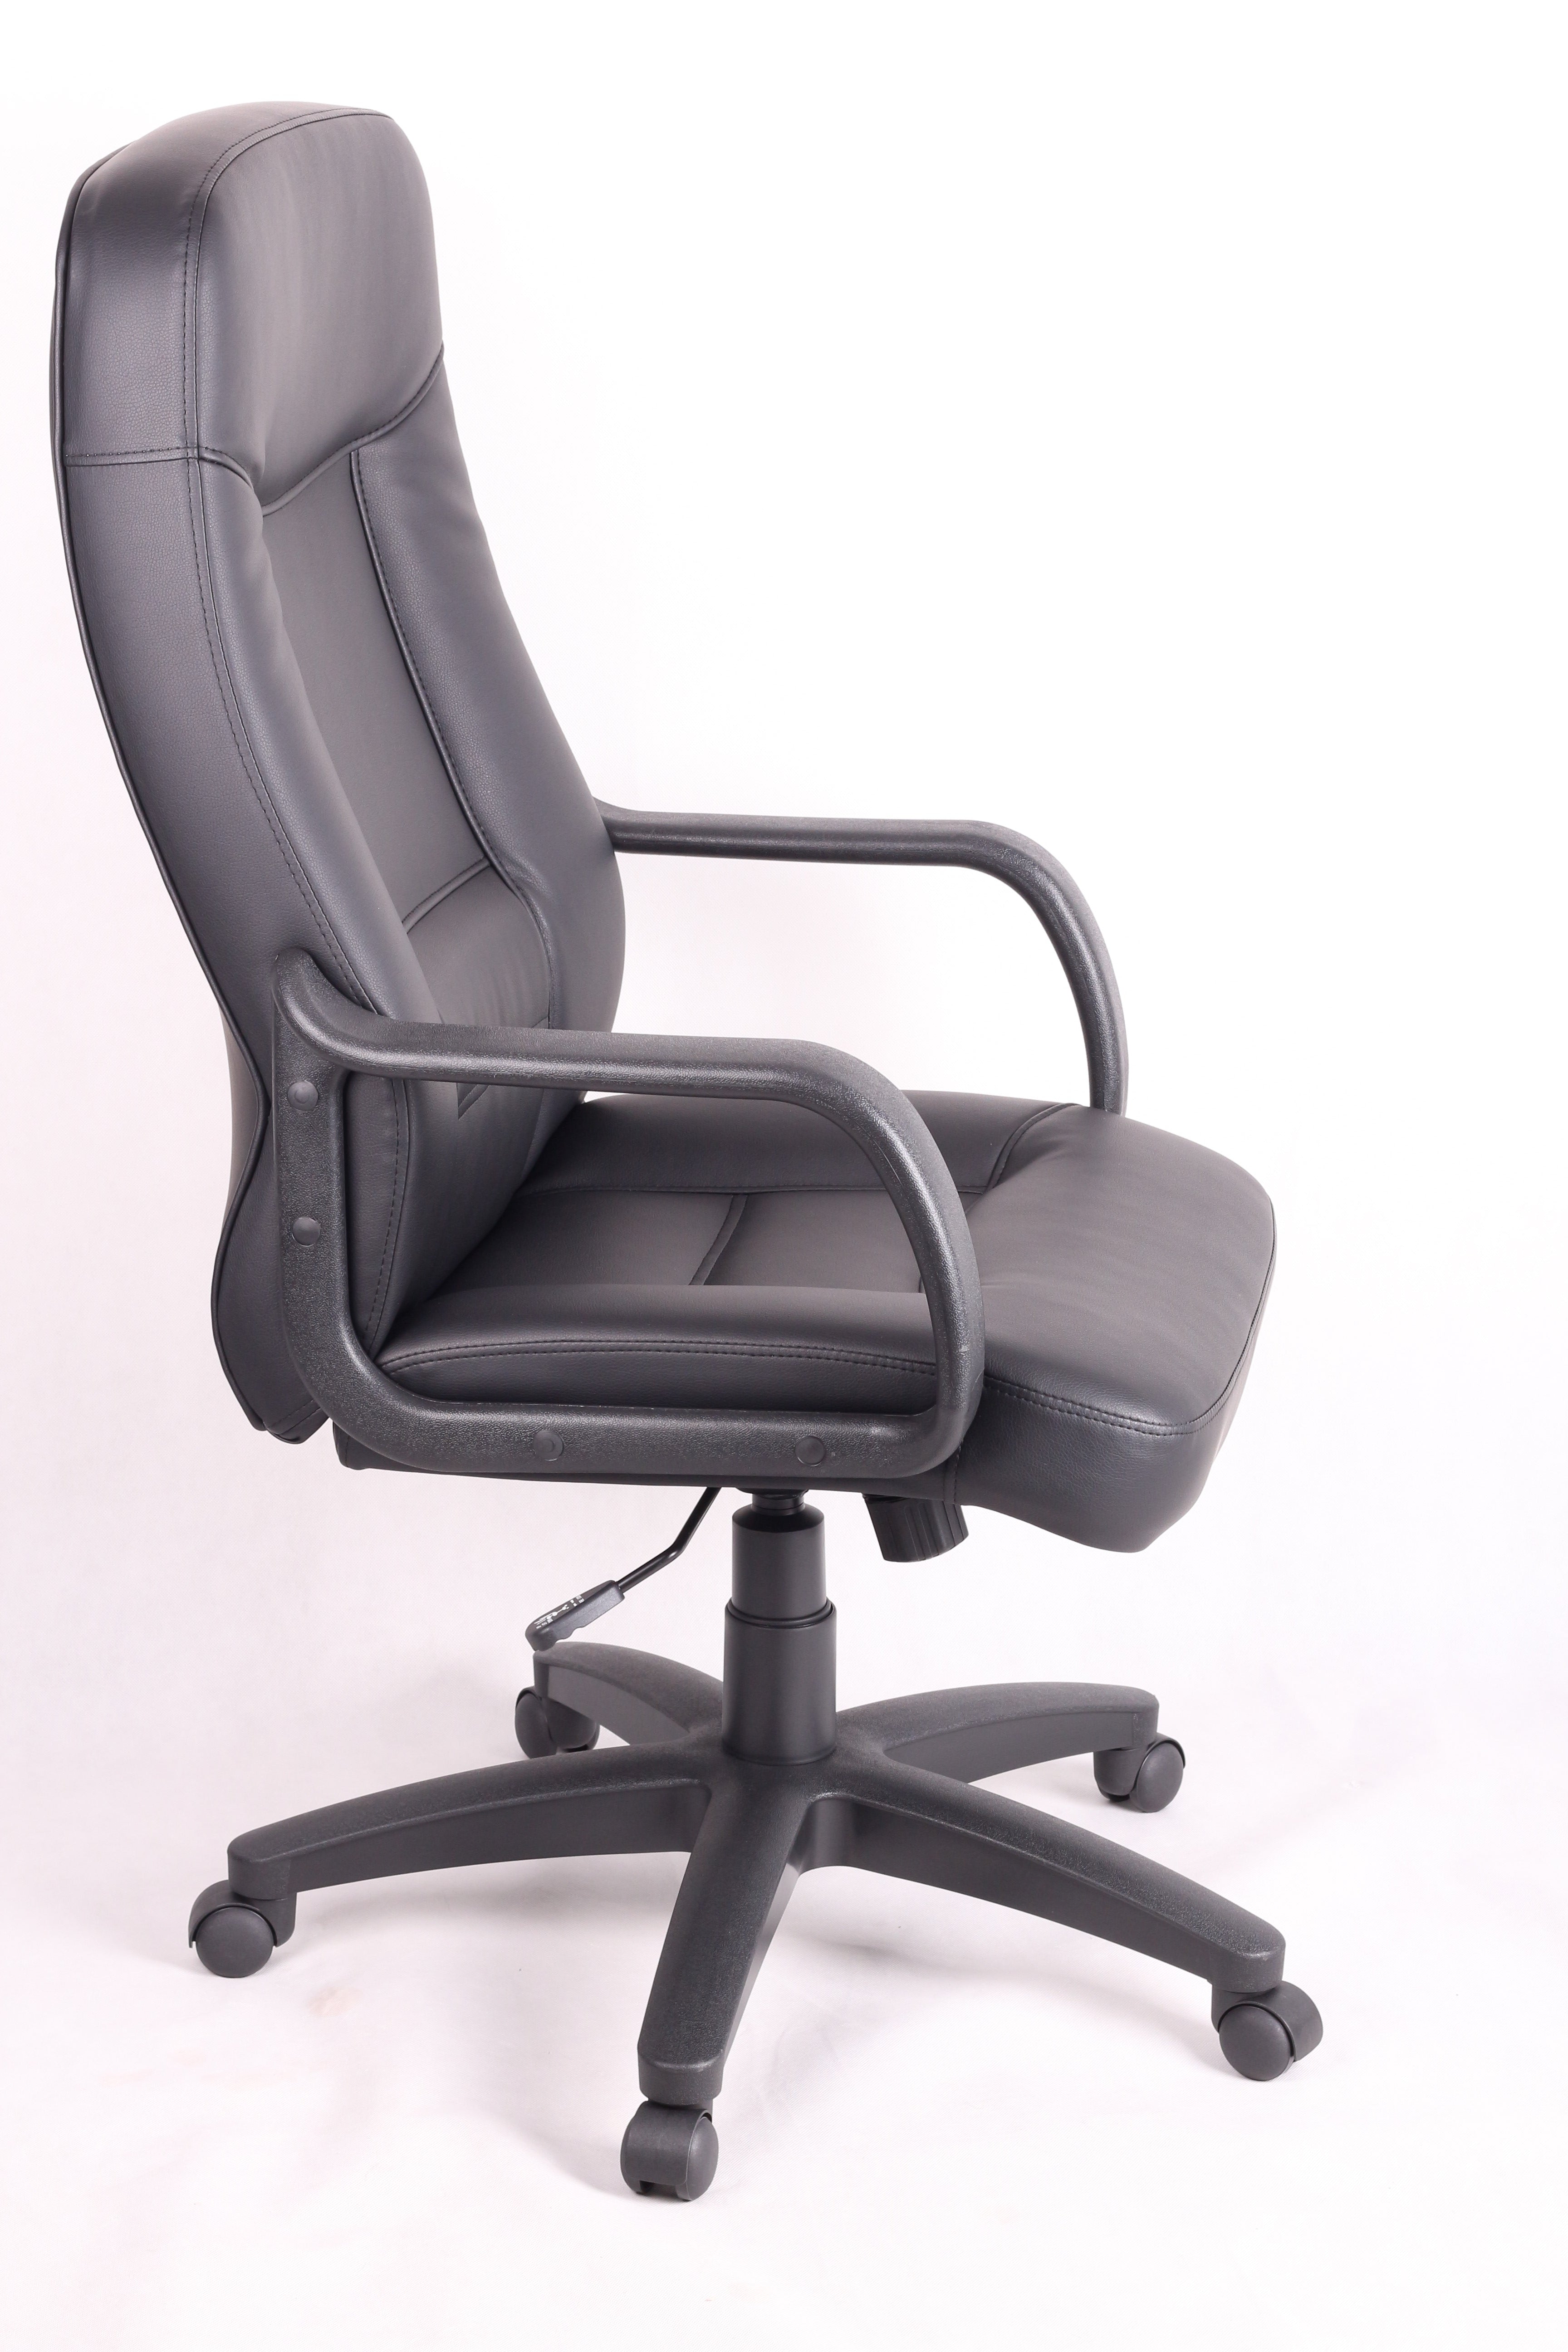 ViscoLogic DUX Ergonomic Adjustable Swivel  PU  Leather Home Office Computer  Desk Chair (Black)